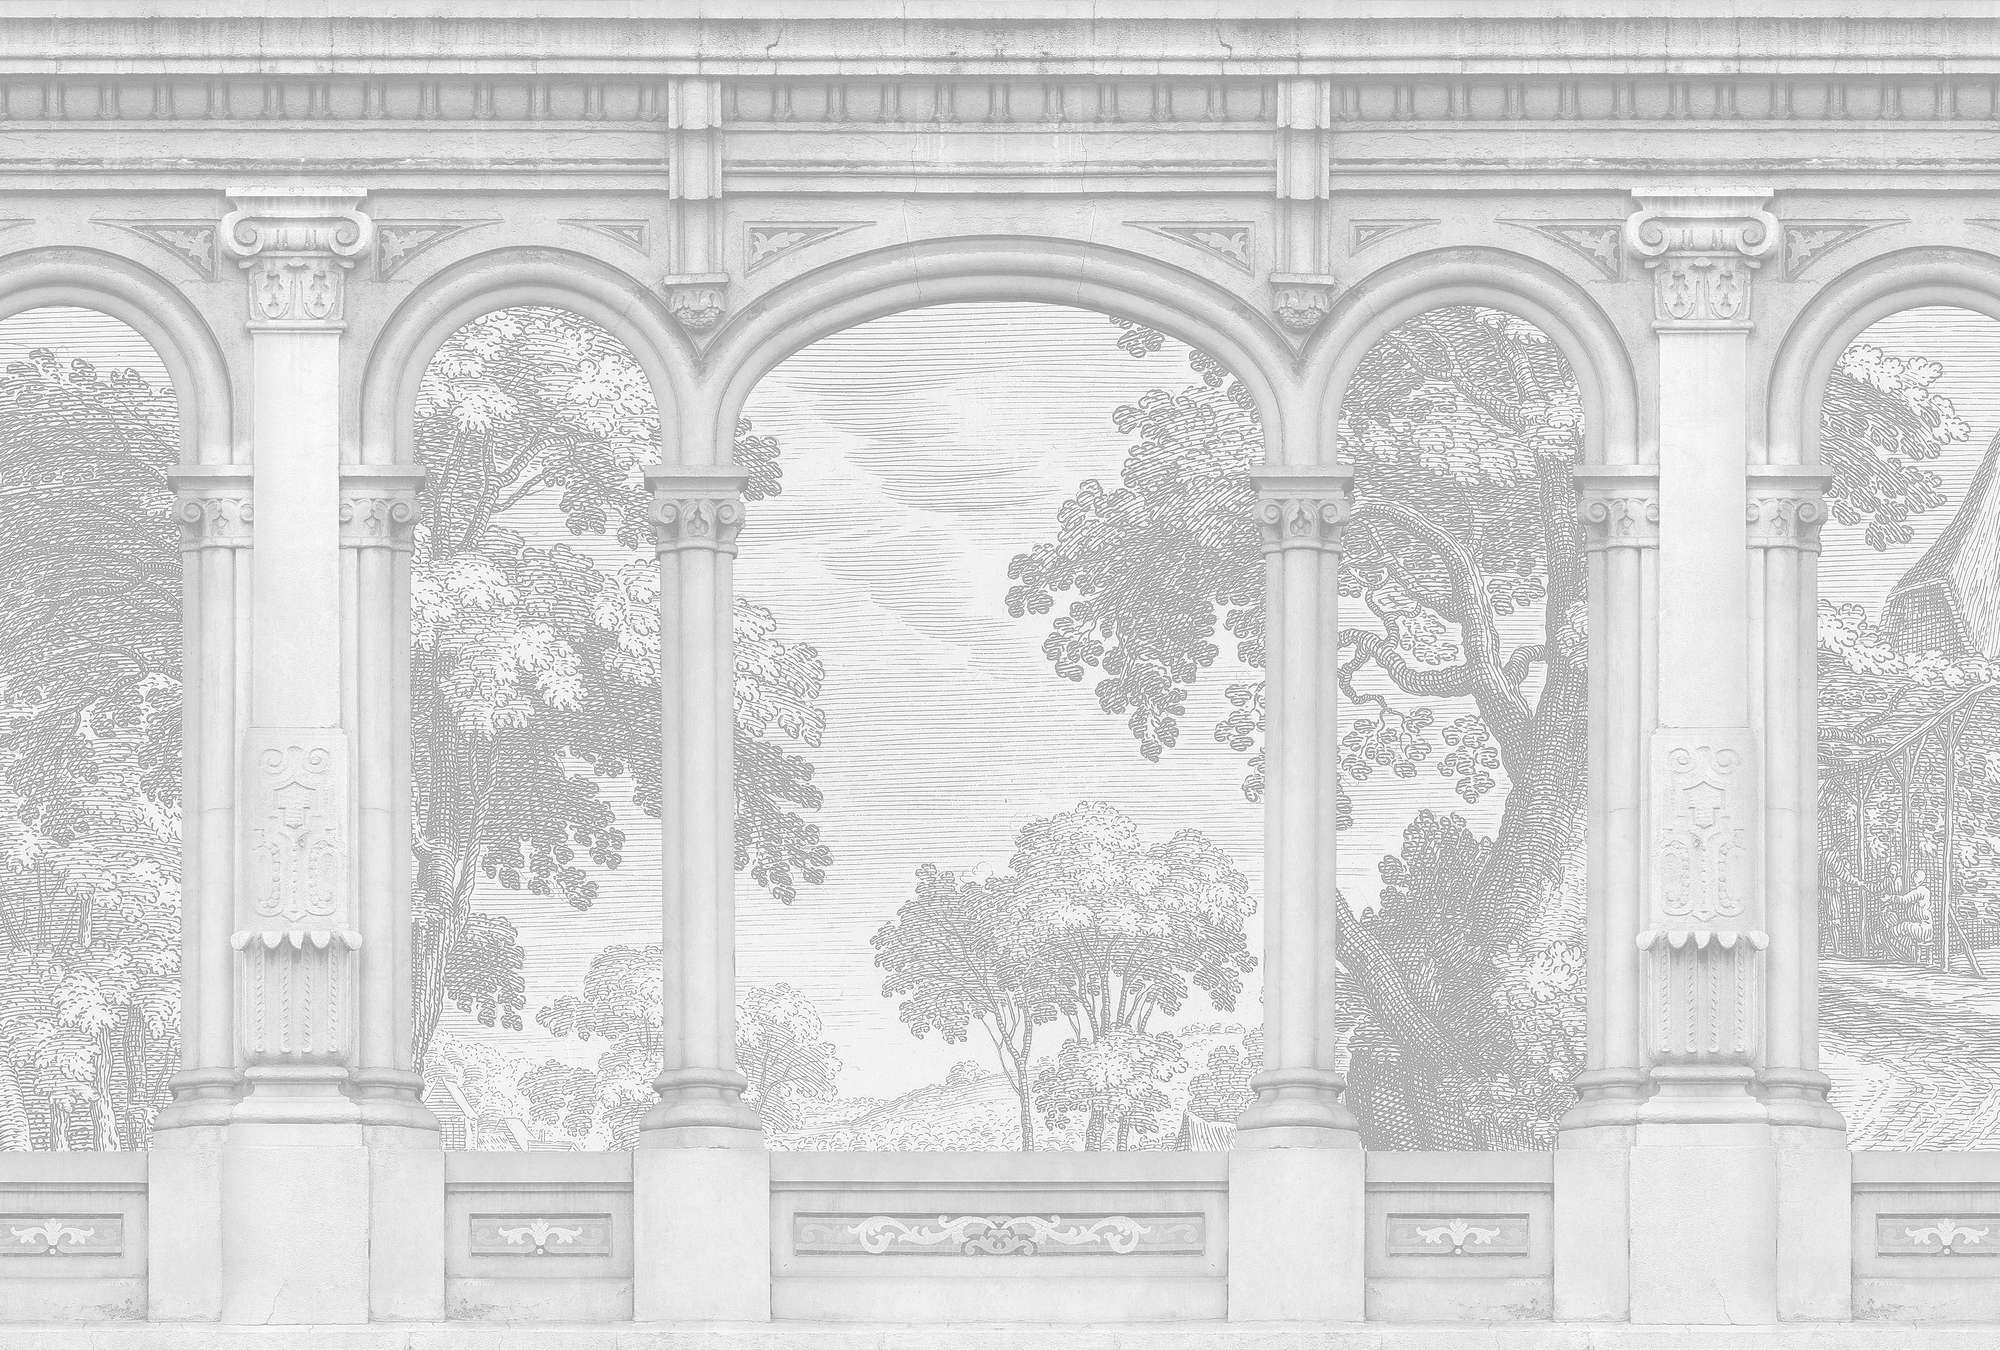             Roma 1 - Papel pintado fotográfico gris Diseño histórico con ventana en arco de medio punto
        